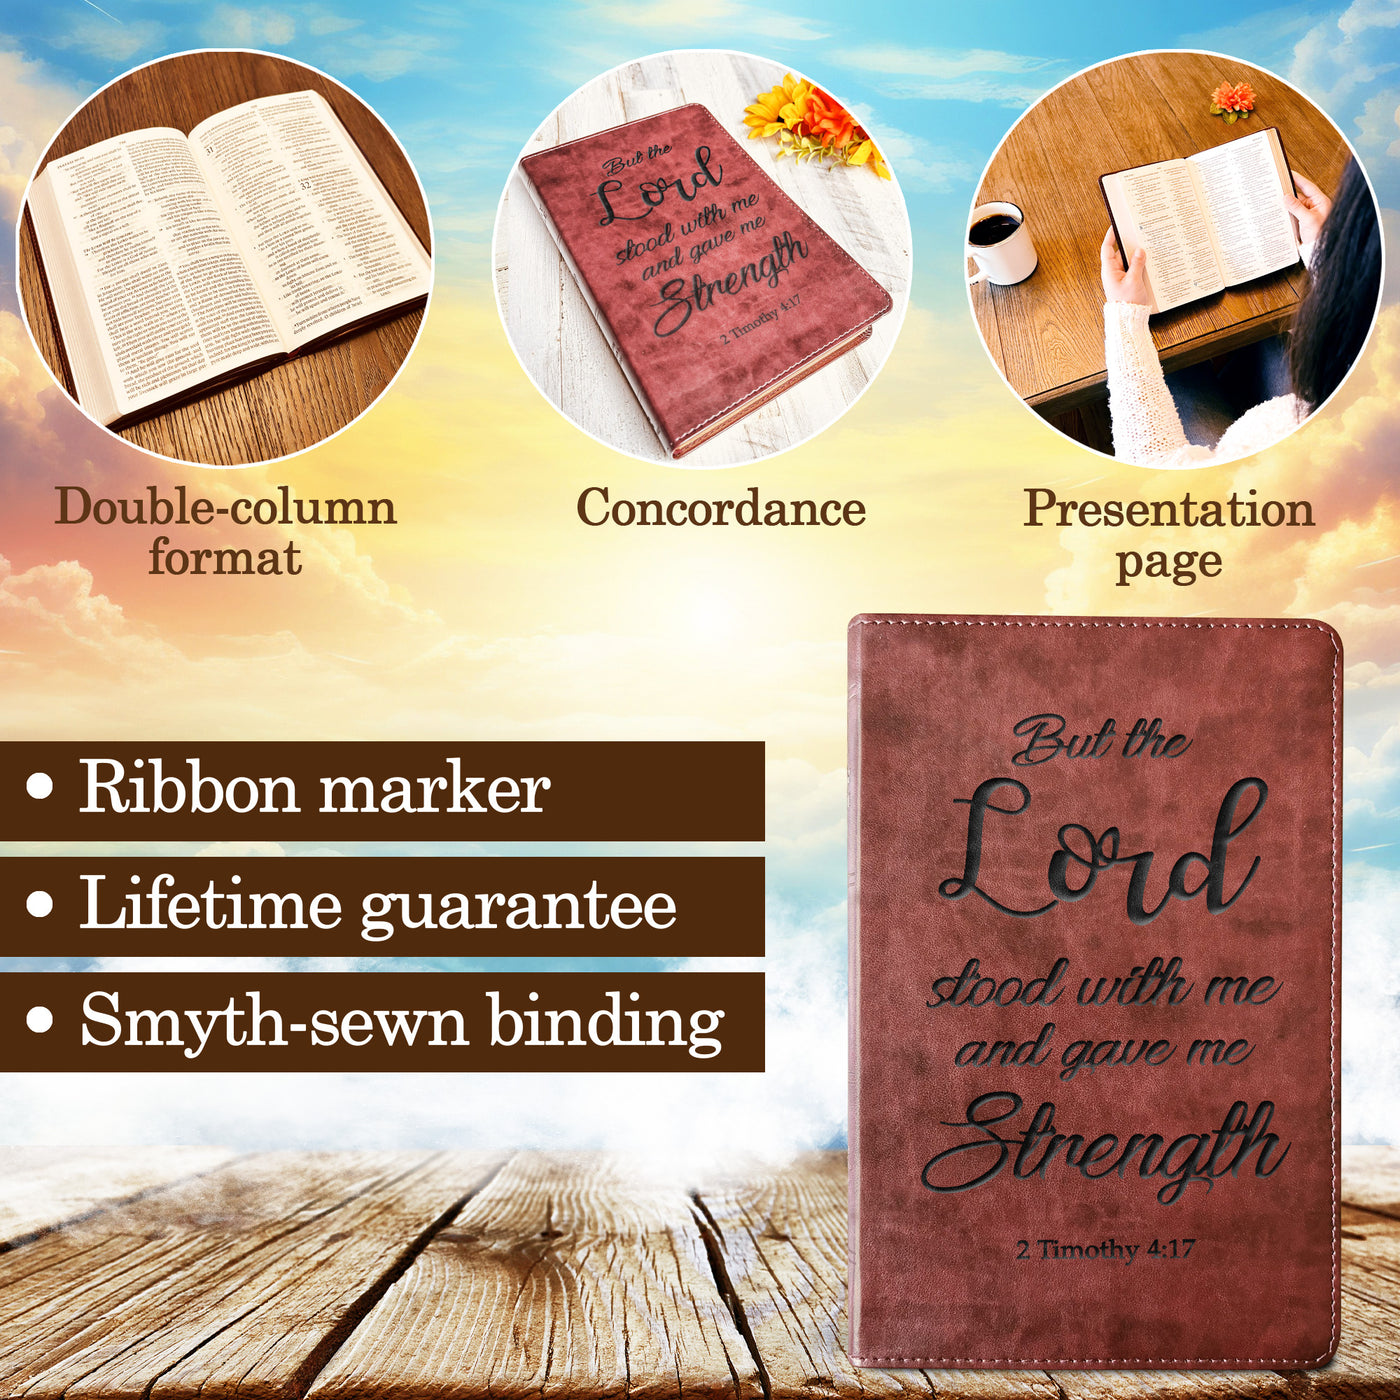 Custom ESV Bible | ESV Large Print Bible Thinline | Custom Engraved Bible English Standard Version | Christian Gifts Baptism Gifts